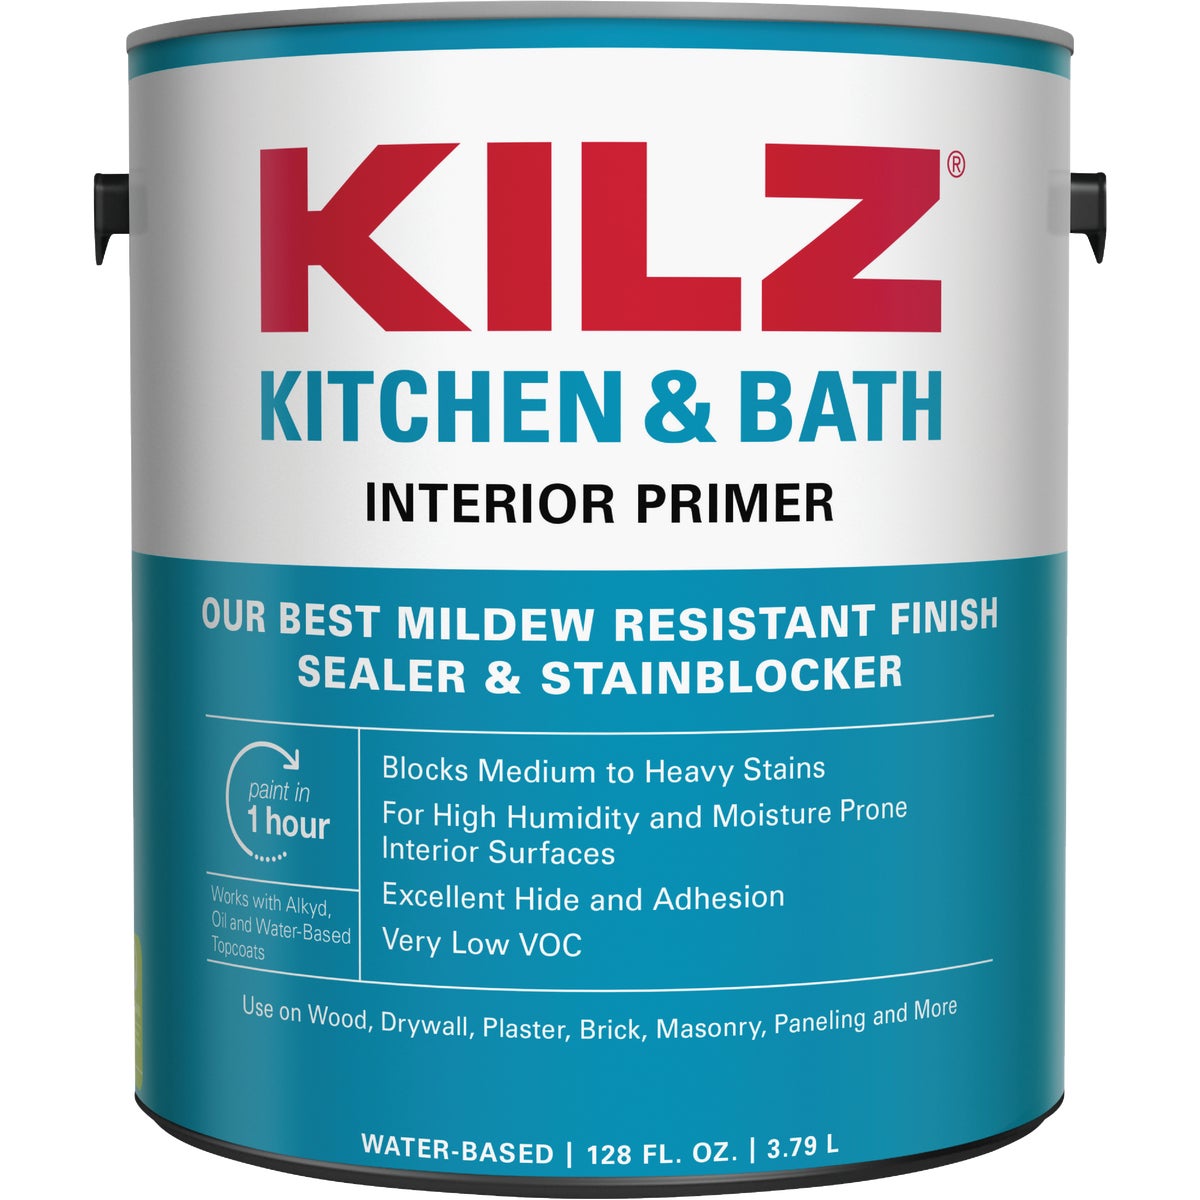 Kilz Kitchen & Bath Water-Based Low VOC Interior Primer Sealer Stainblocker, White, 1 Gal.